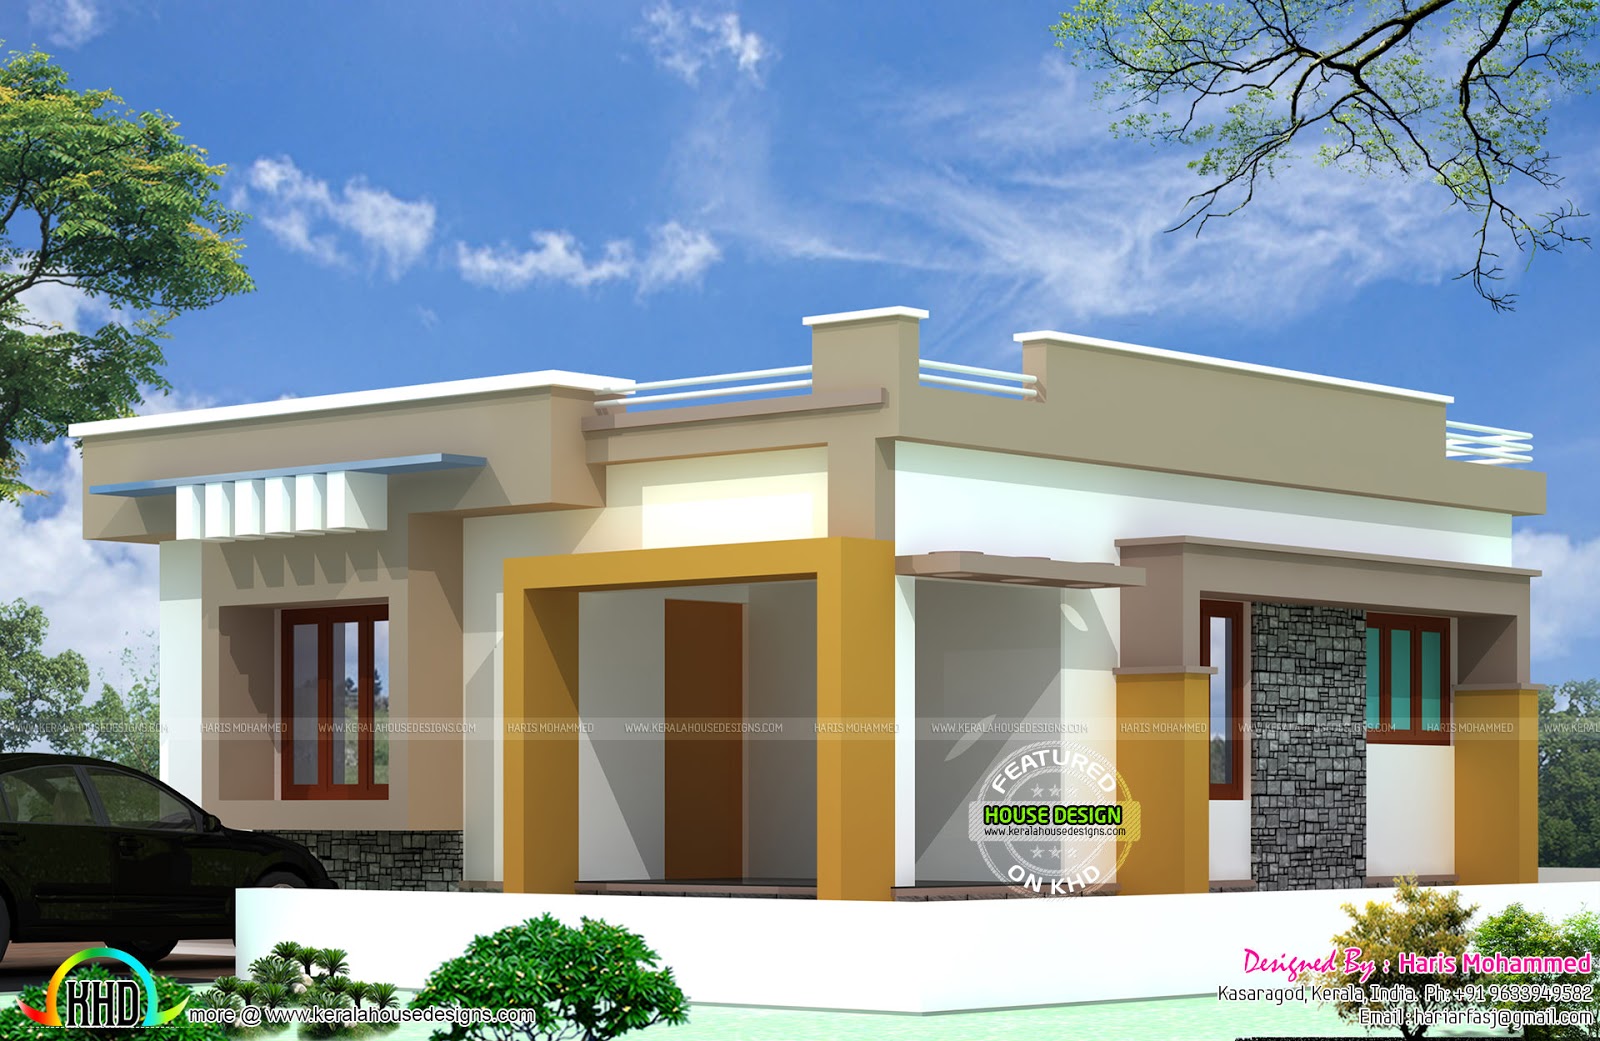   10  lakhs  budget house  plan  Kerala home  design  and floor 